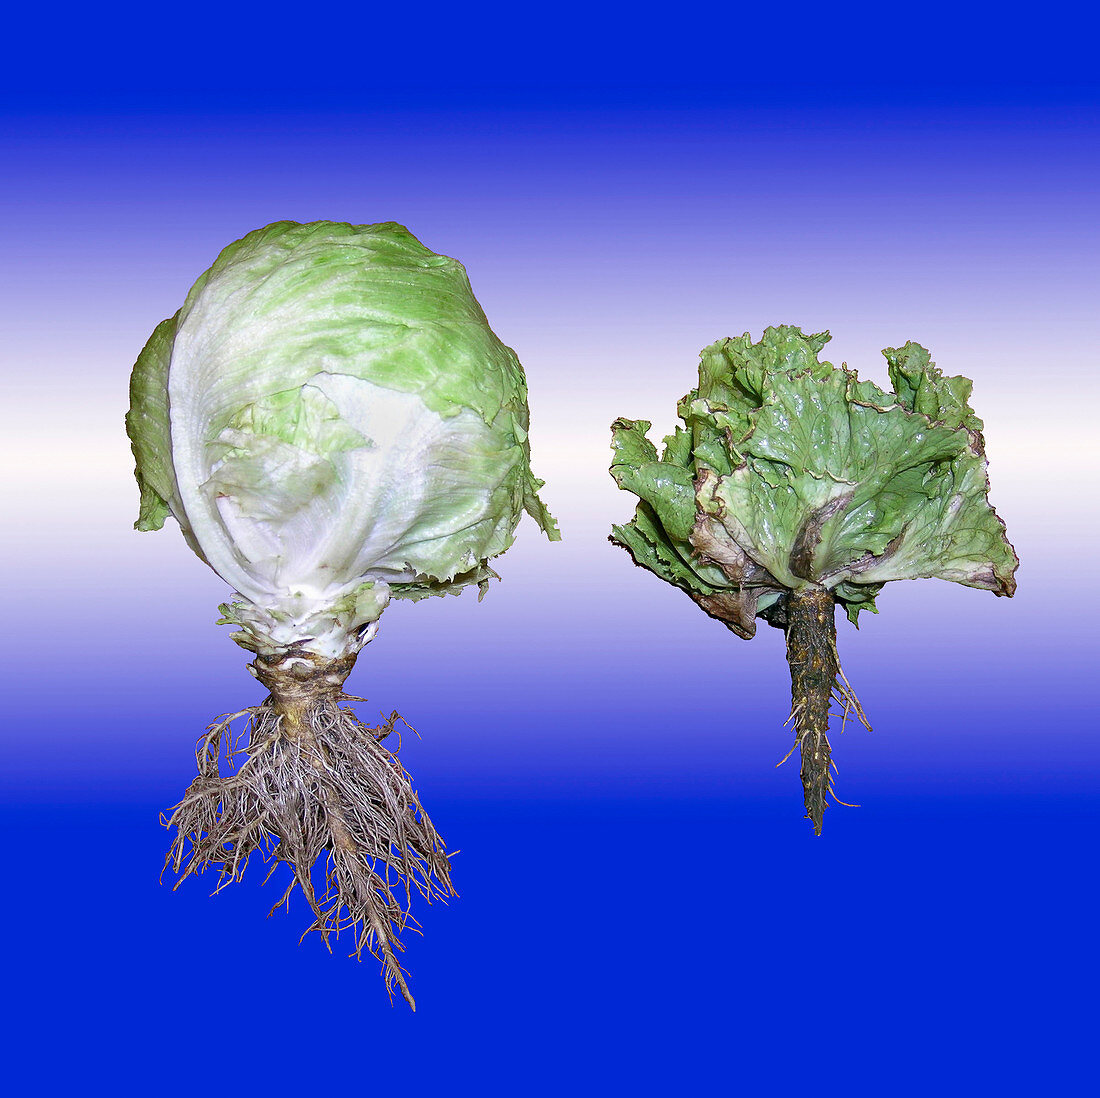 Healthy and diseased lettuce plants